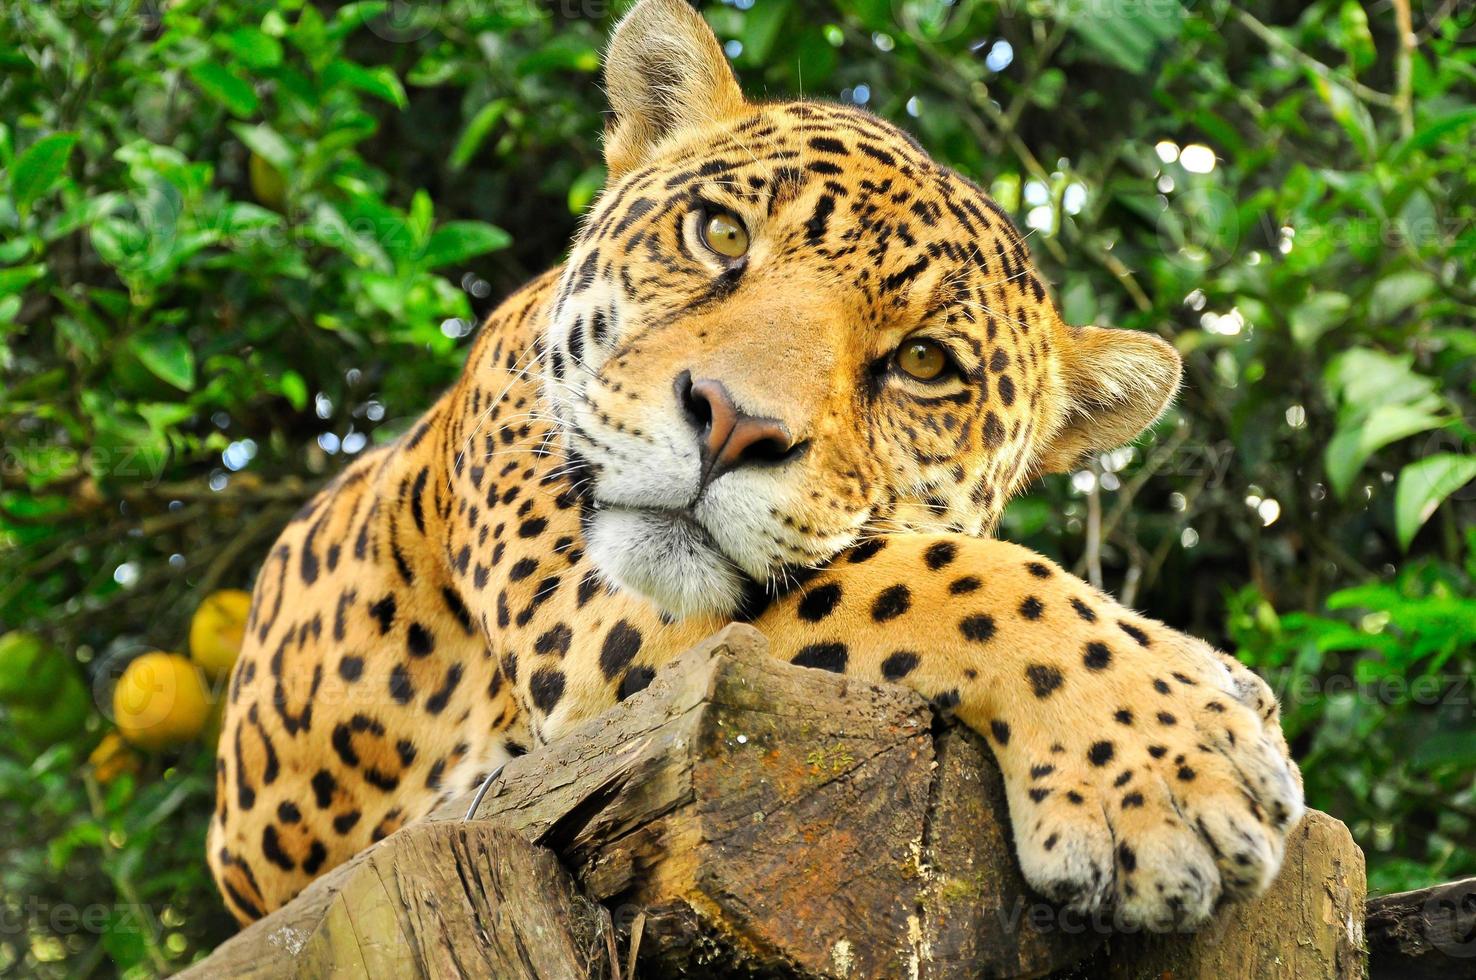 giaguaro adulto, ecuador foto